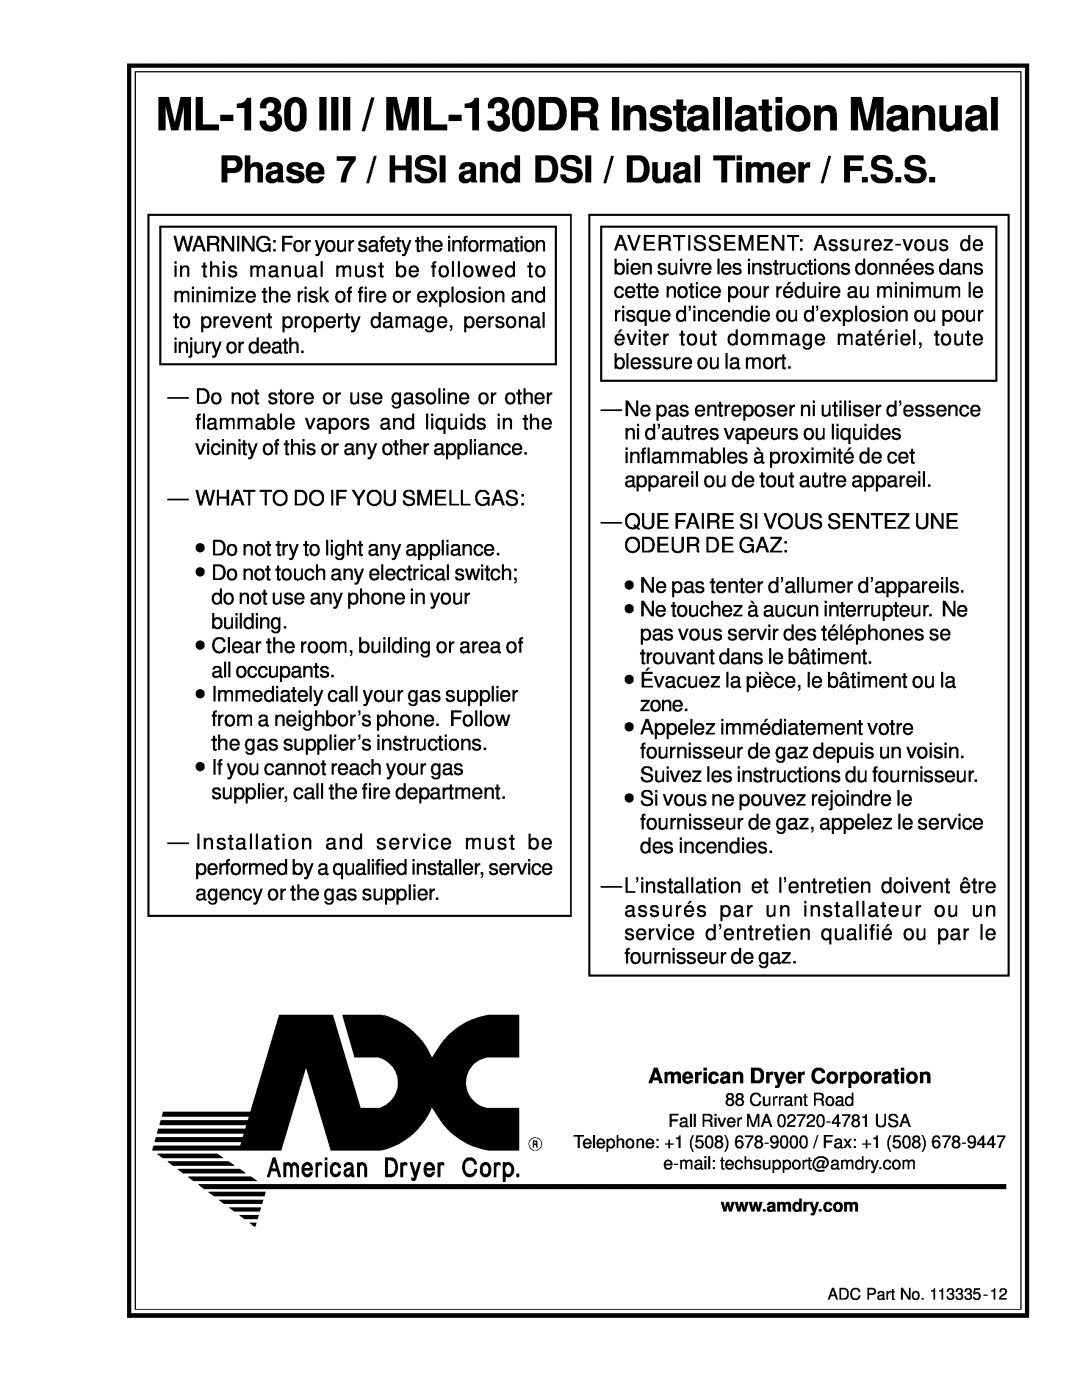 American Dryer Corp installation manual American Dryer Corporation, ML-130 III / ML-130DR Installation Manual 